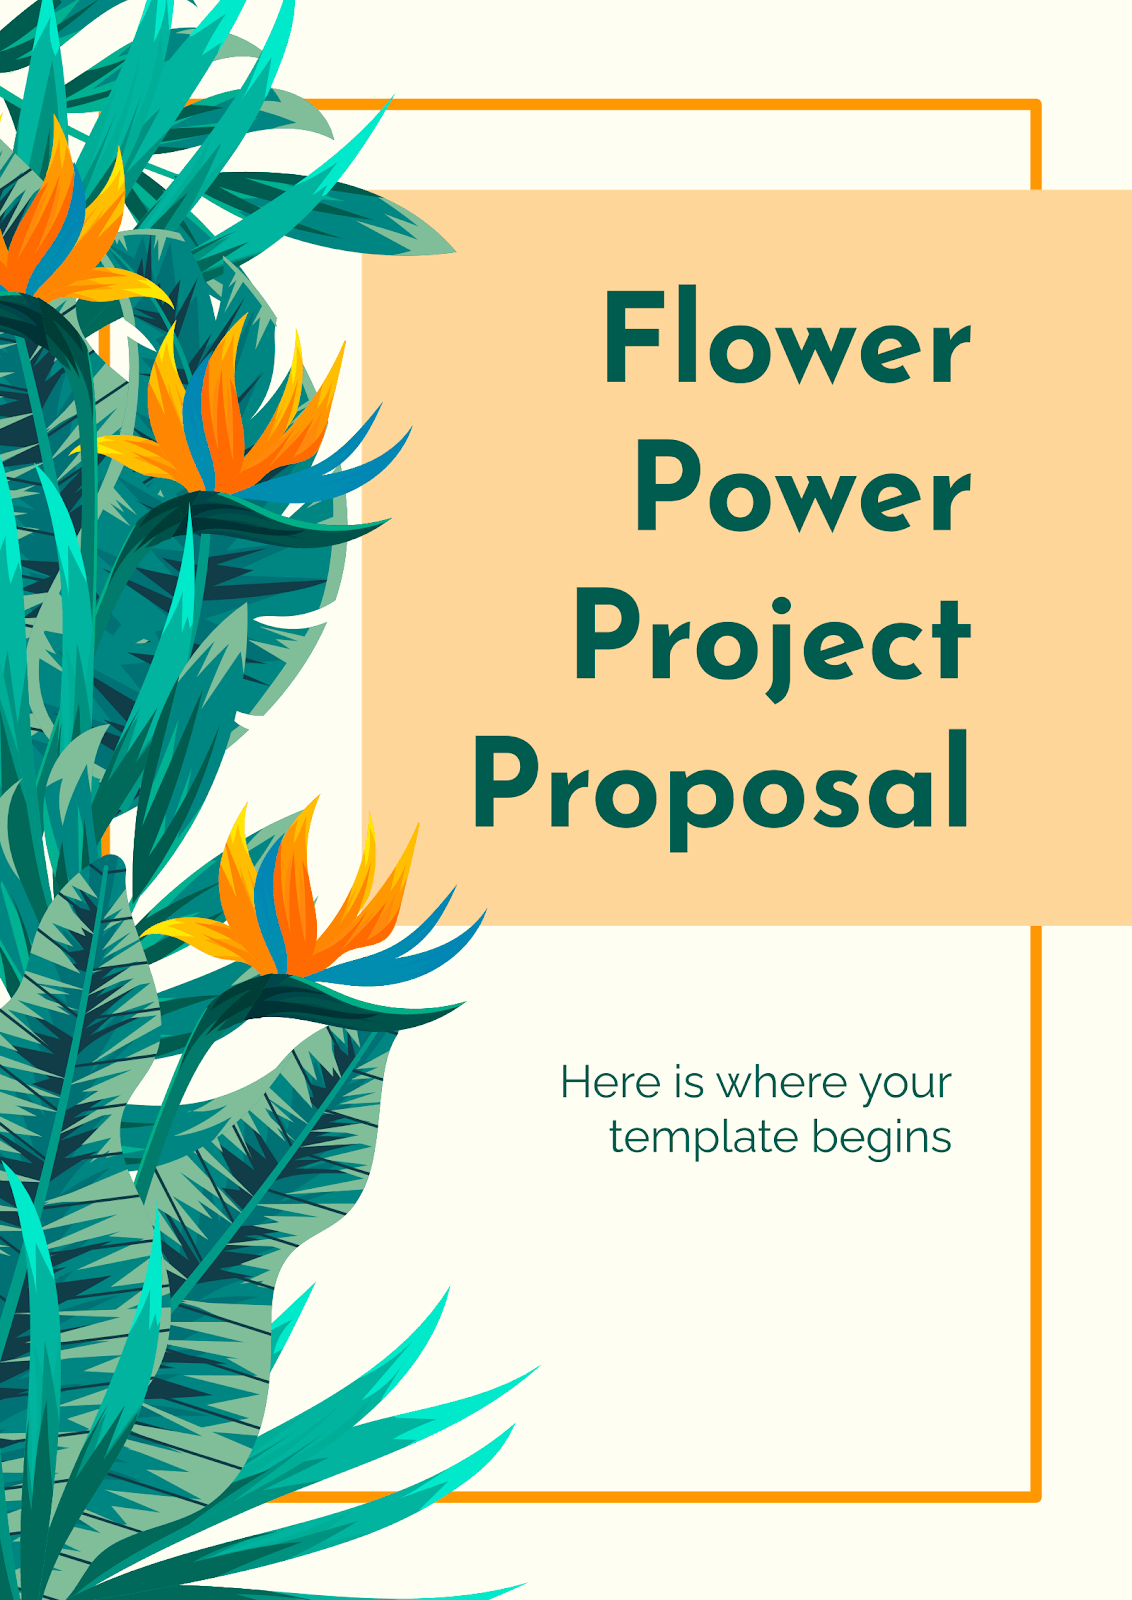 Flower Power项目提案PPT主题